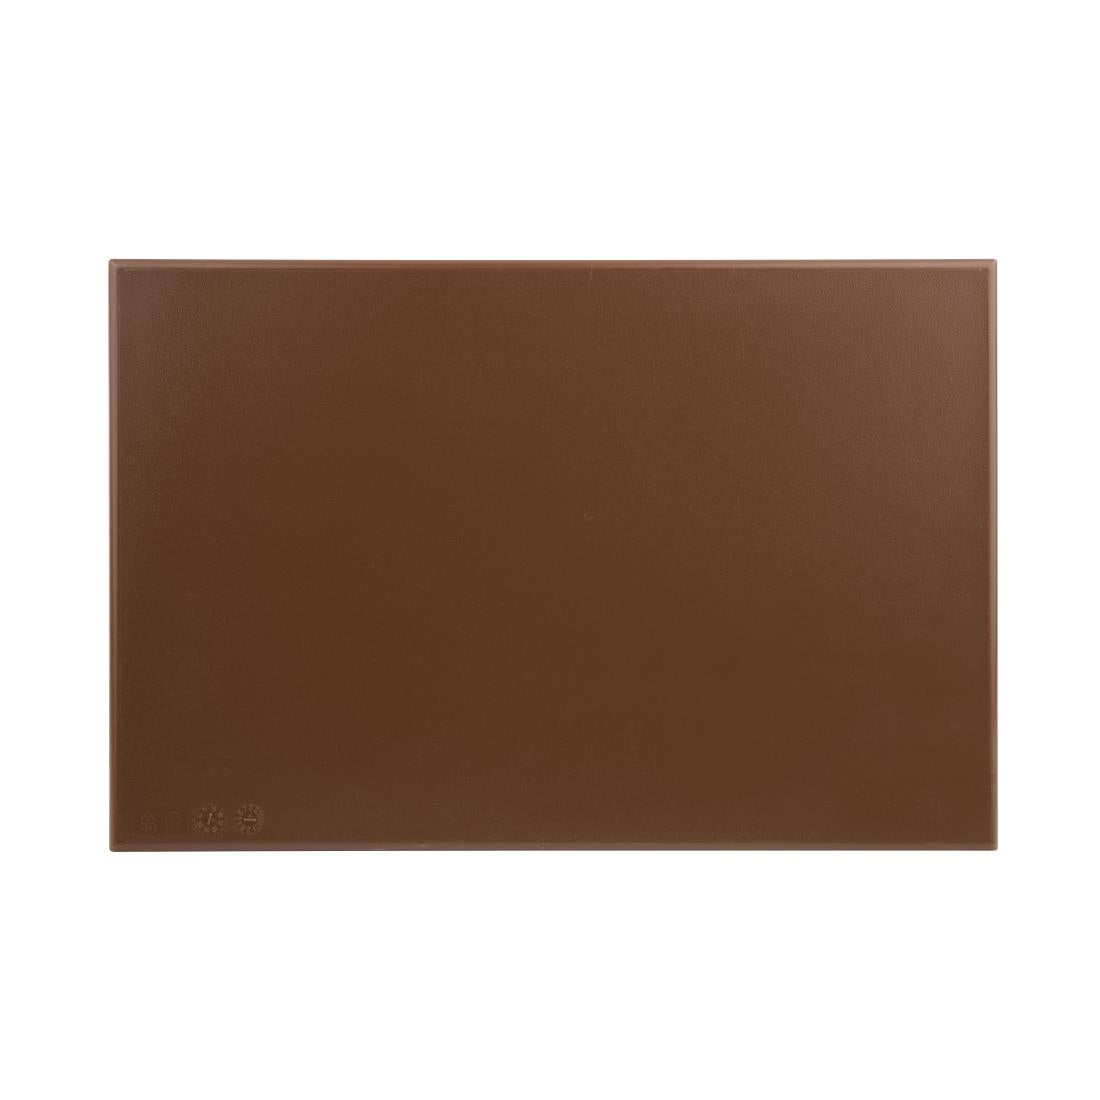 EDLP - Hygiplas High Density Chopping Board Brown - 450x300x12mm 17.75x12x0.5"